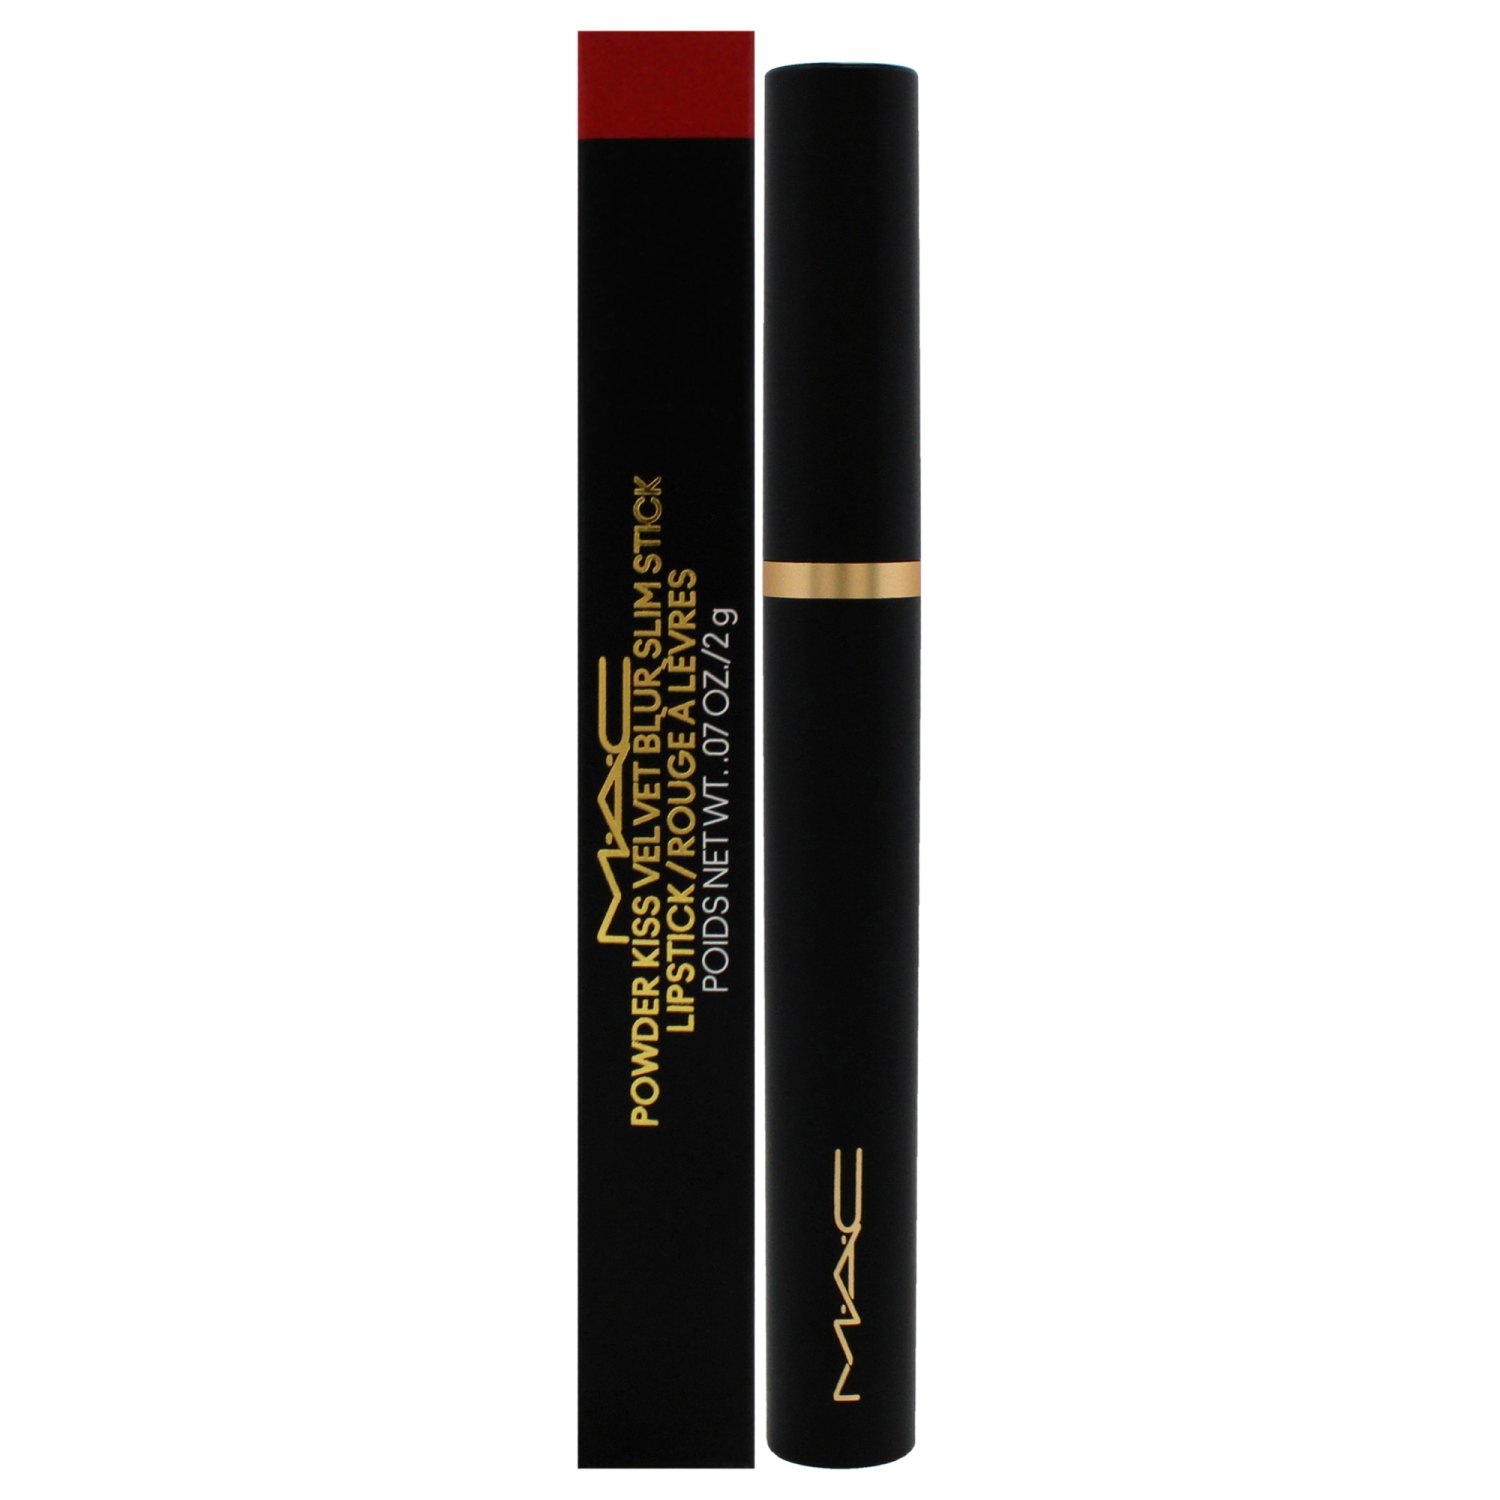 Powder Kiss Velvet Blur Slim Stick - 889 Ruby New by MAC for Women - 0.07 oz Lipstick